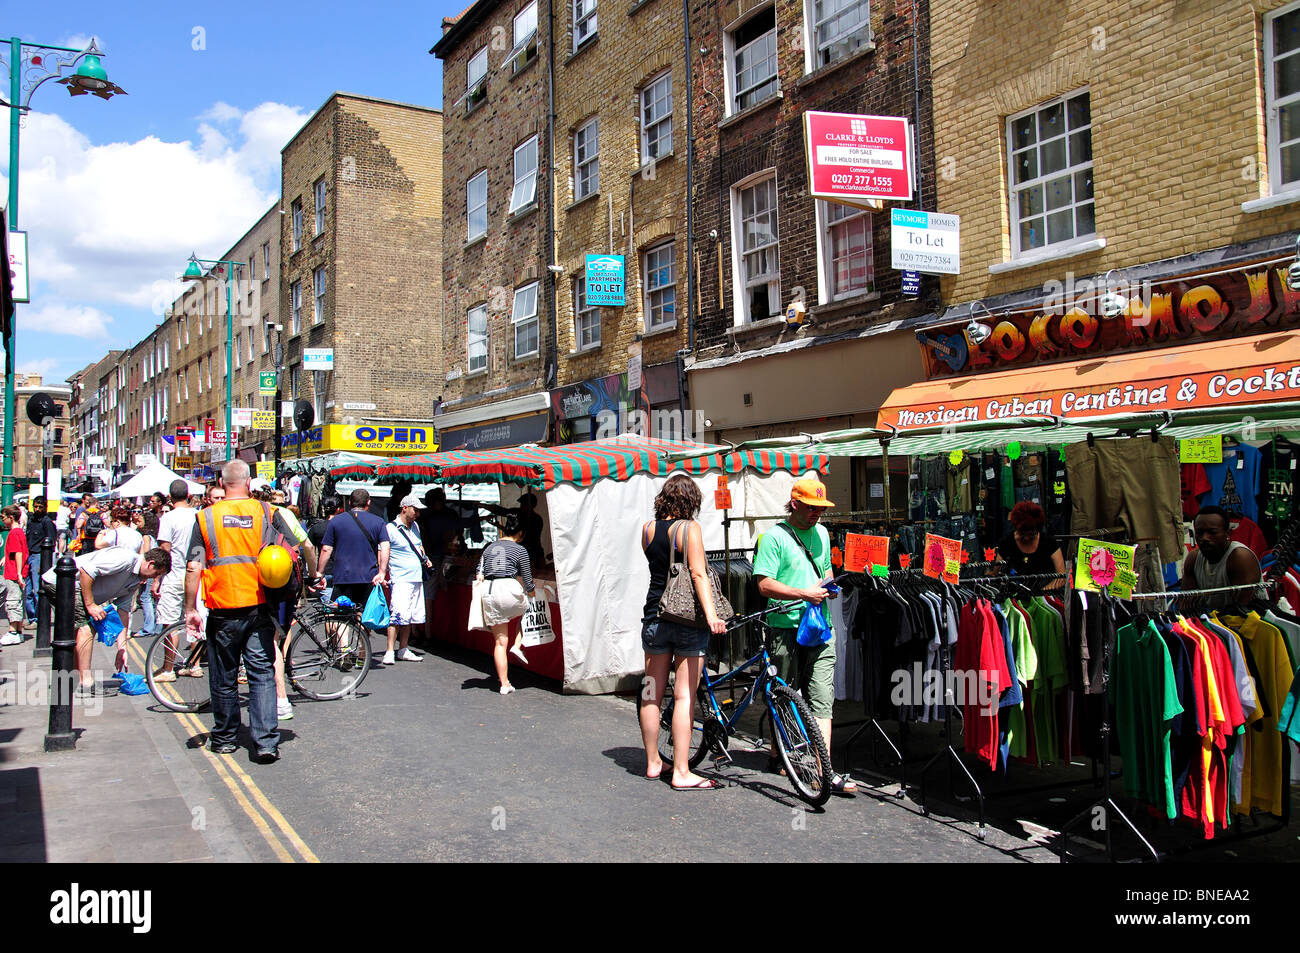 Market stalls, Brick Lane Market, Spitalfields, The London Borough of Tower Hamlets, Greater London, England, United Kingdom Stock Photo